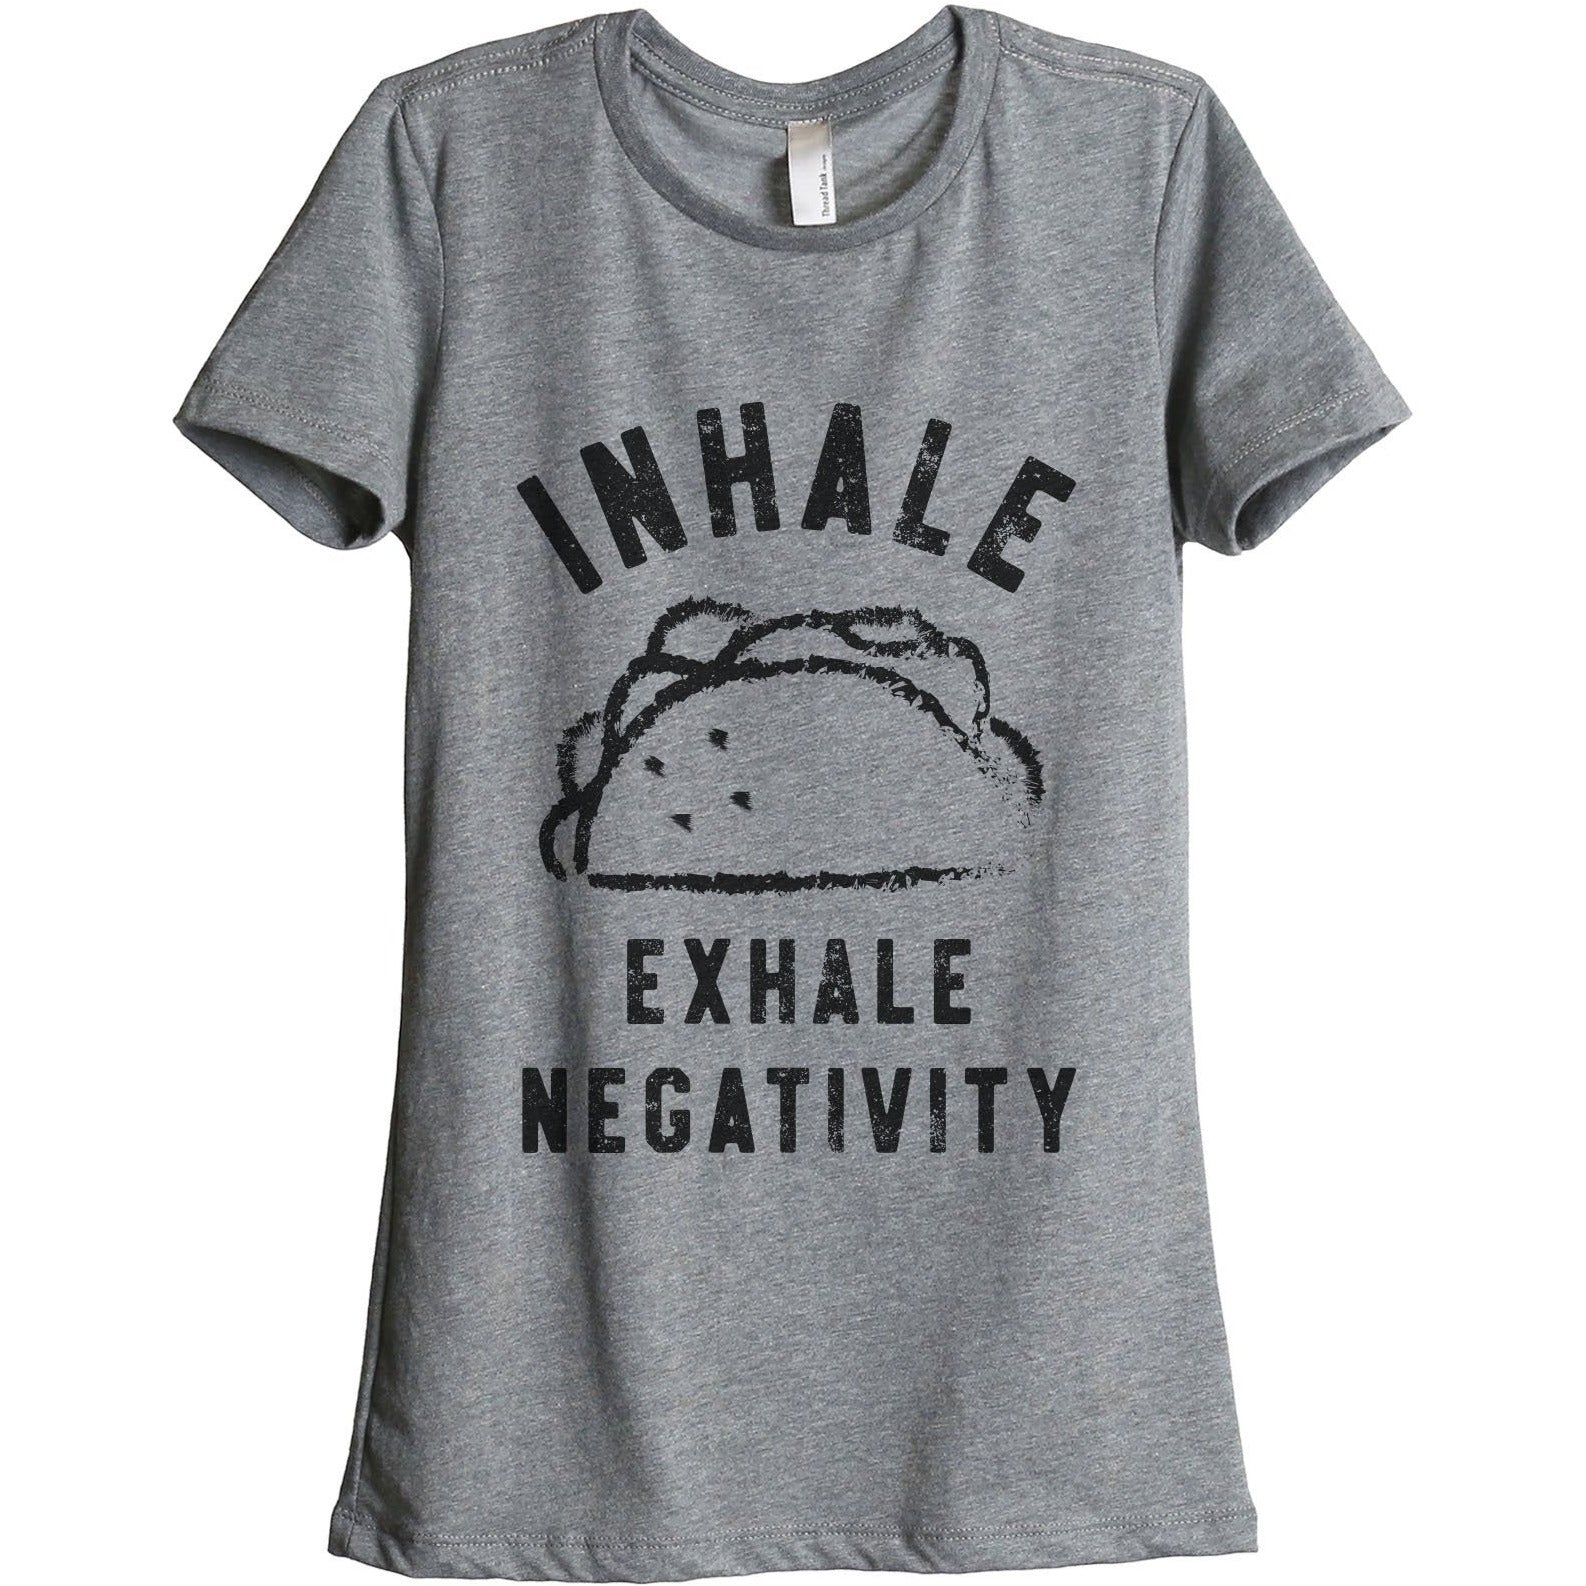 Inhale Tacos Exhale Negativity